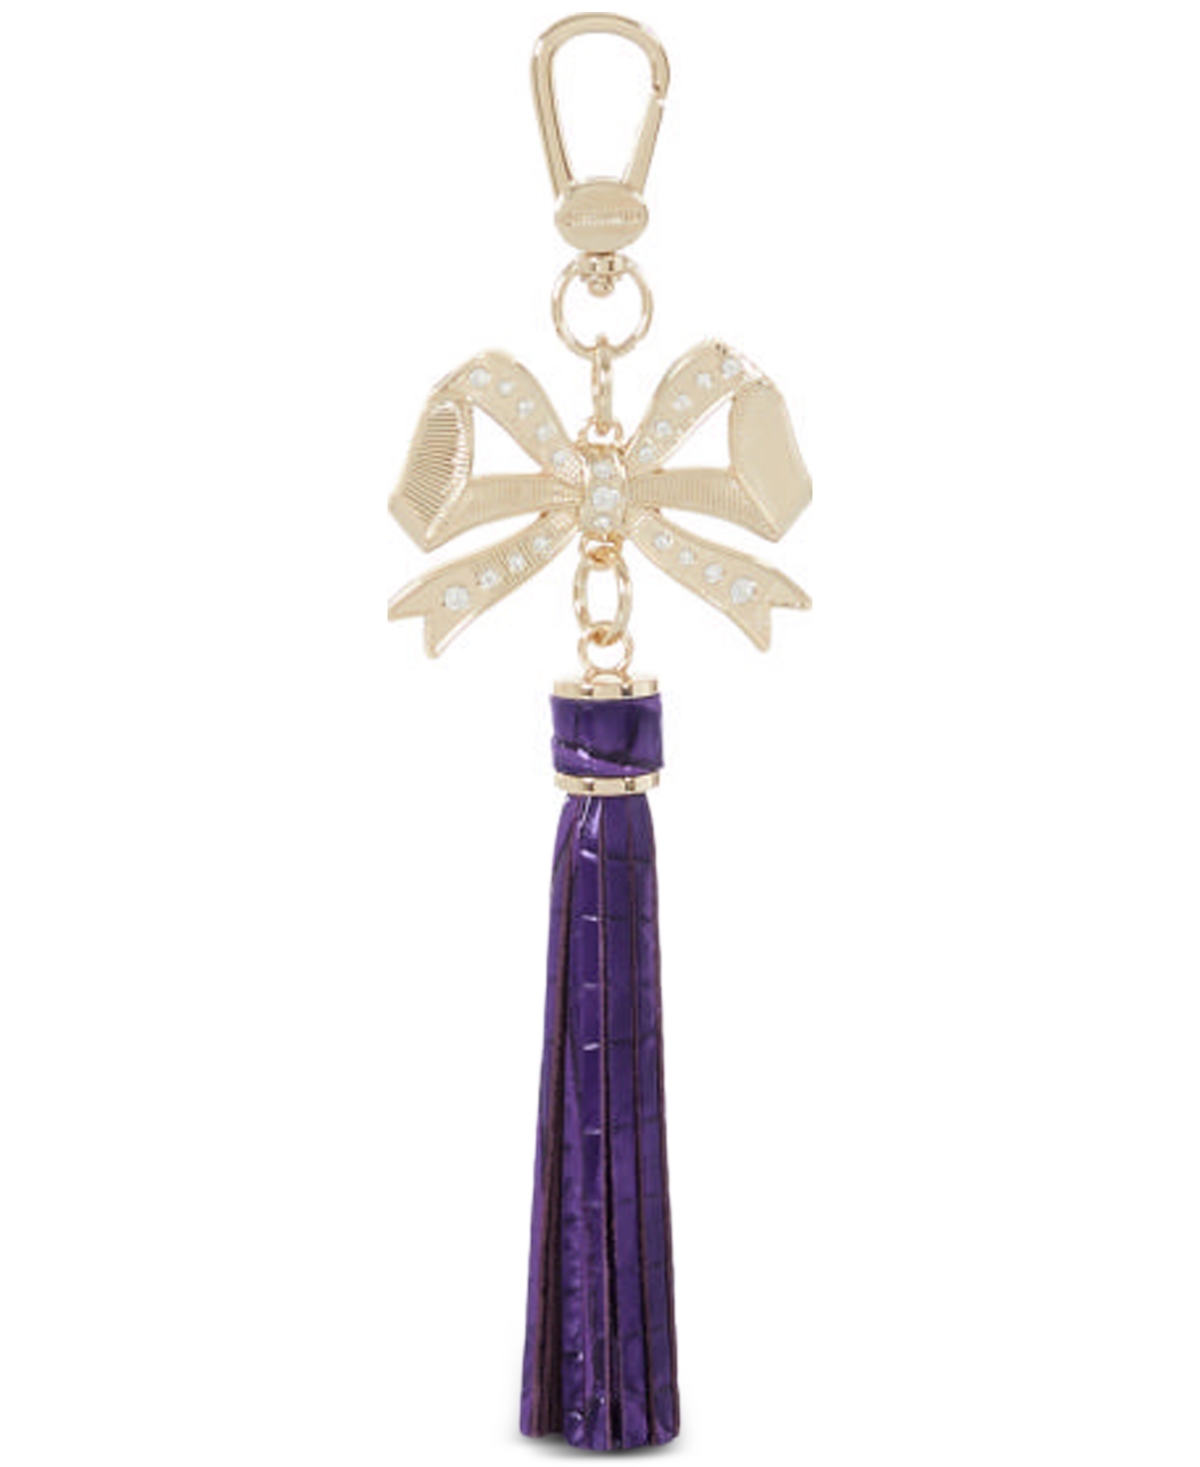 Brahmin Bow Charm Melbourne Embossed Leather Tassel In Royal Purple